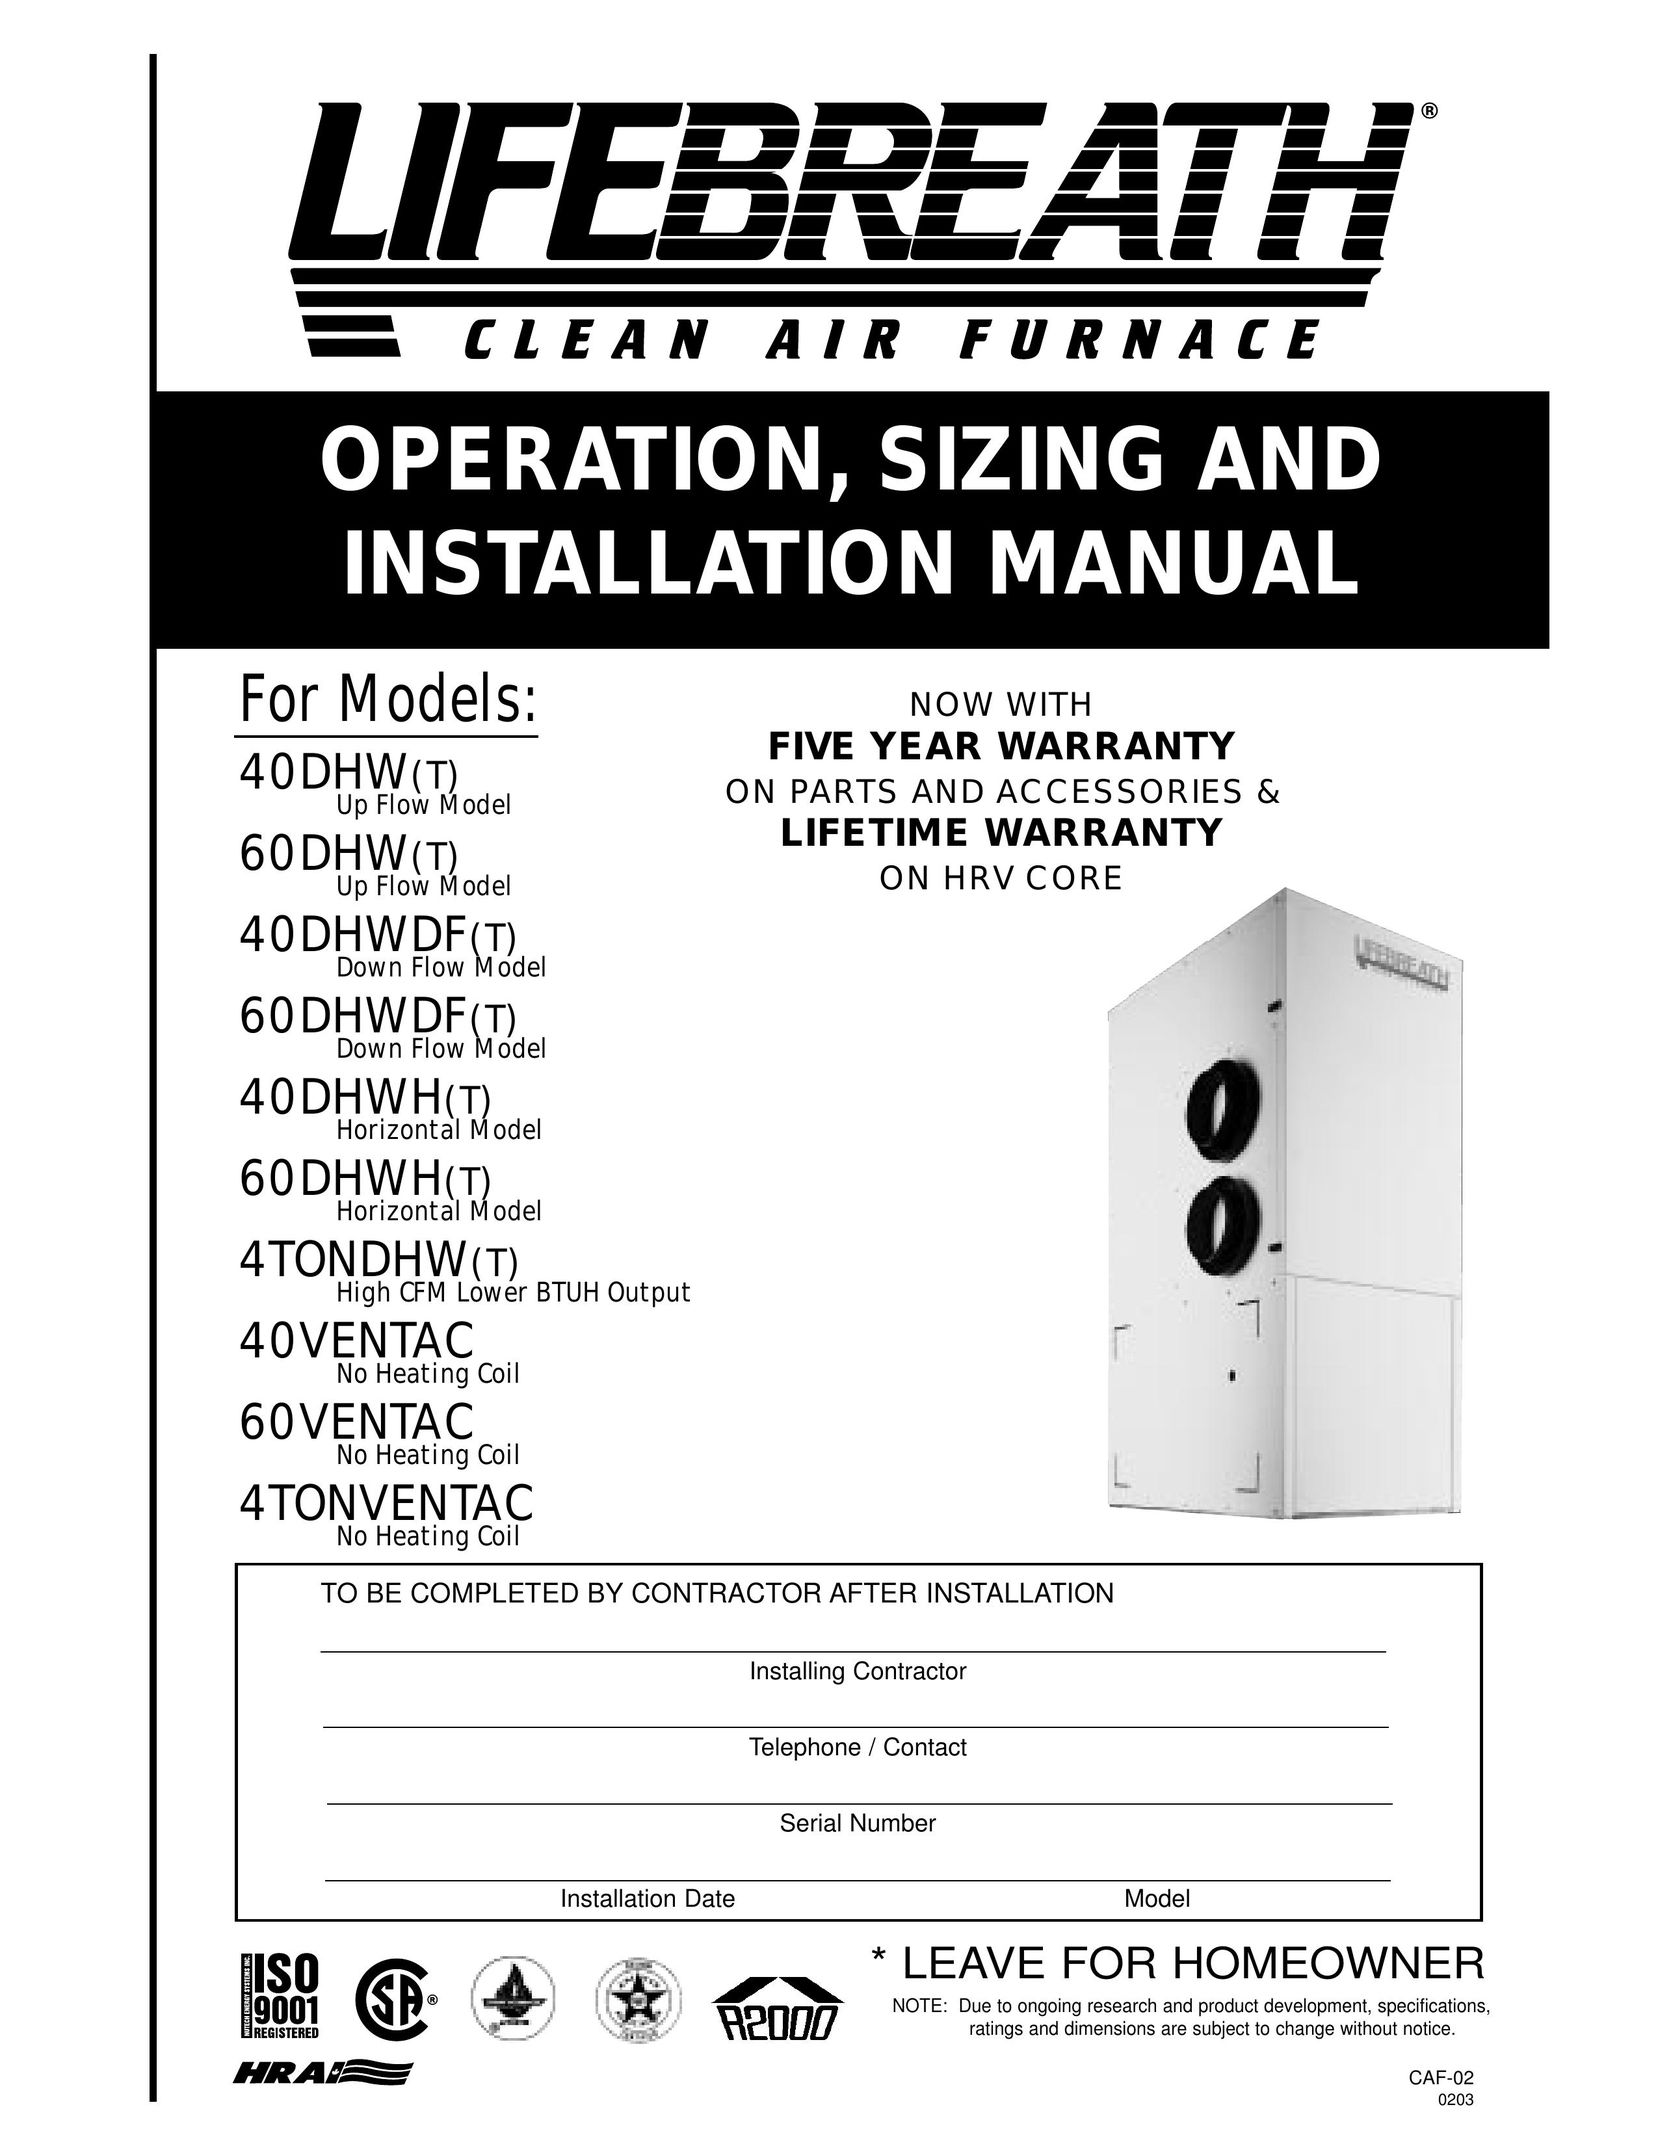 Lifebreath 4TONDHW(T) Thermostat User Manual